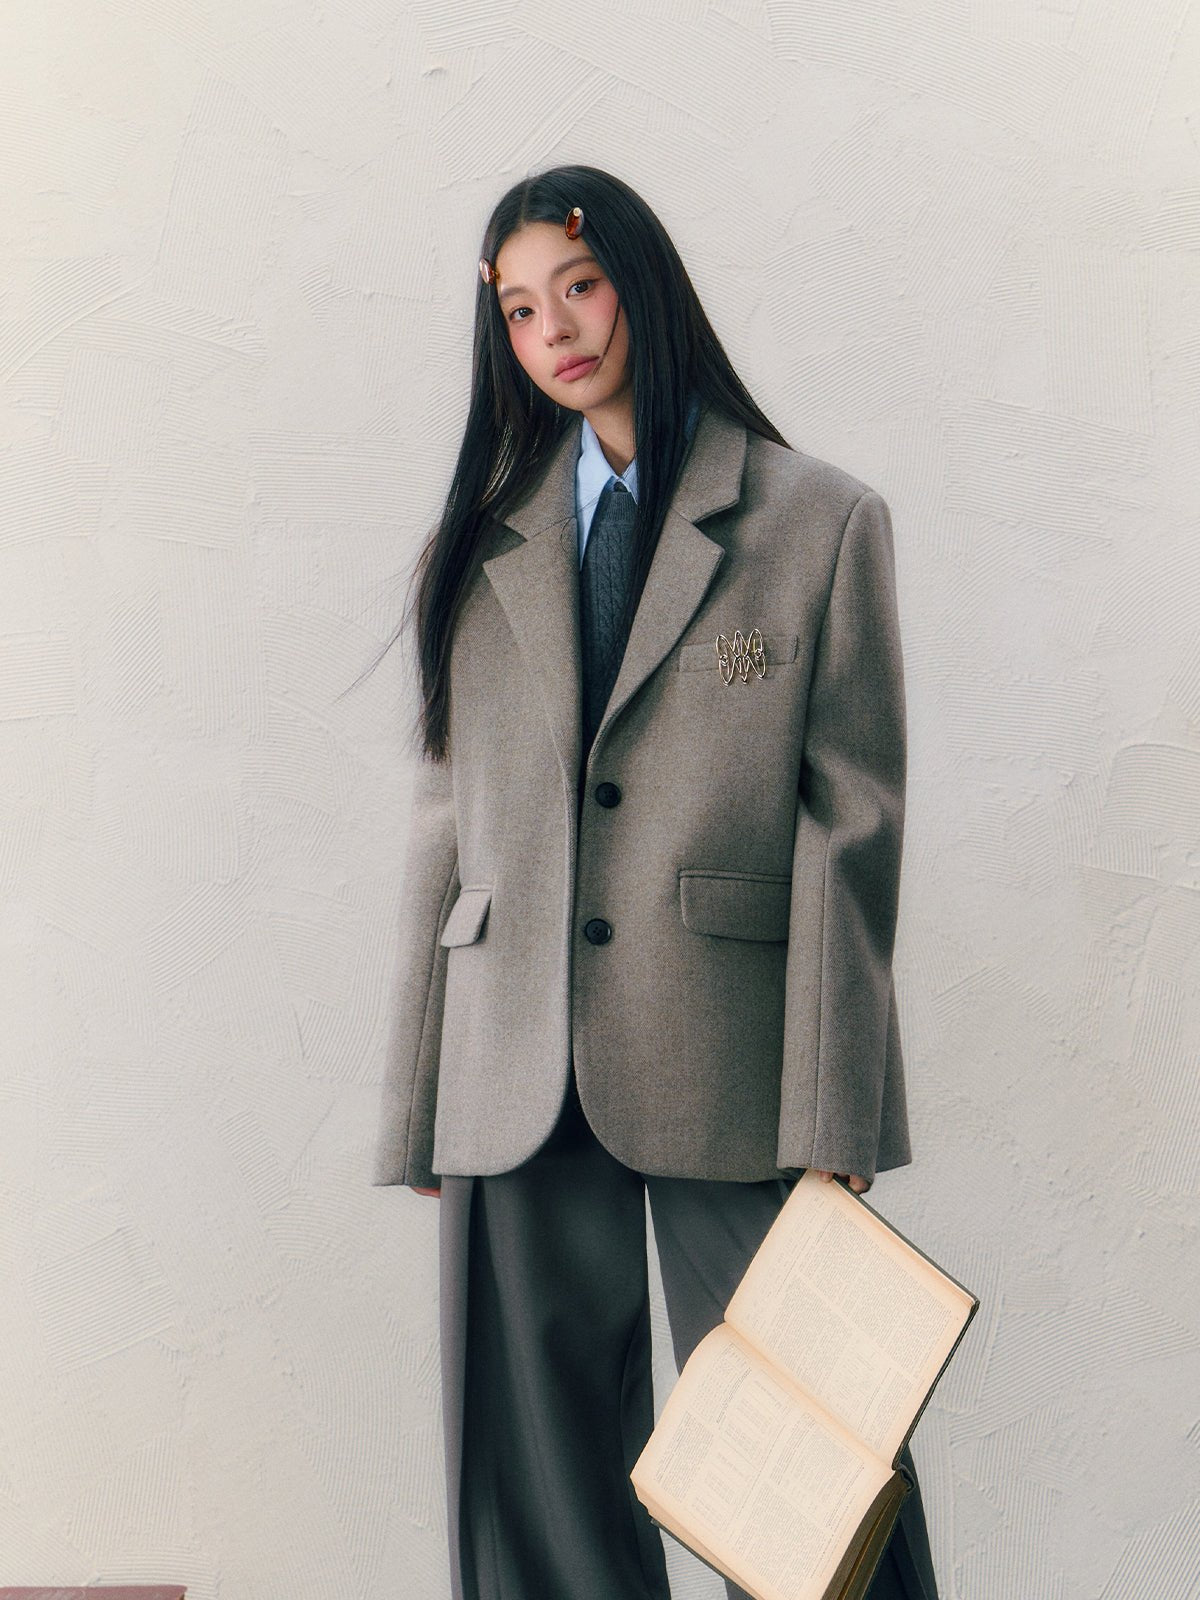 Wide Silhouette Wool Suit Jacket SHI0039